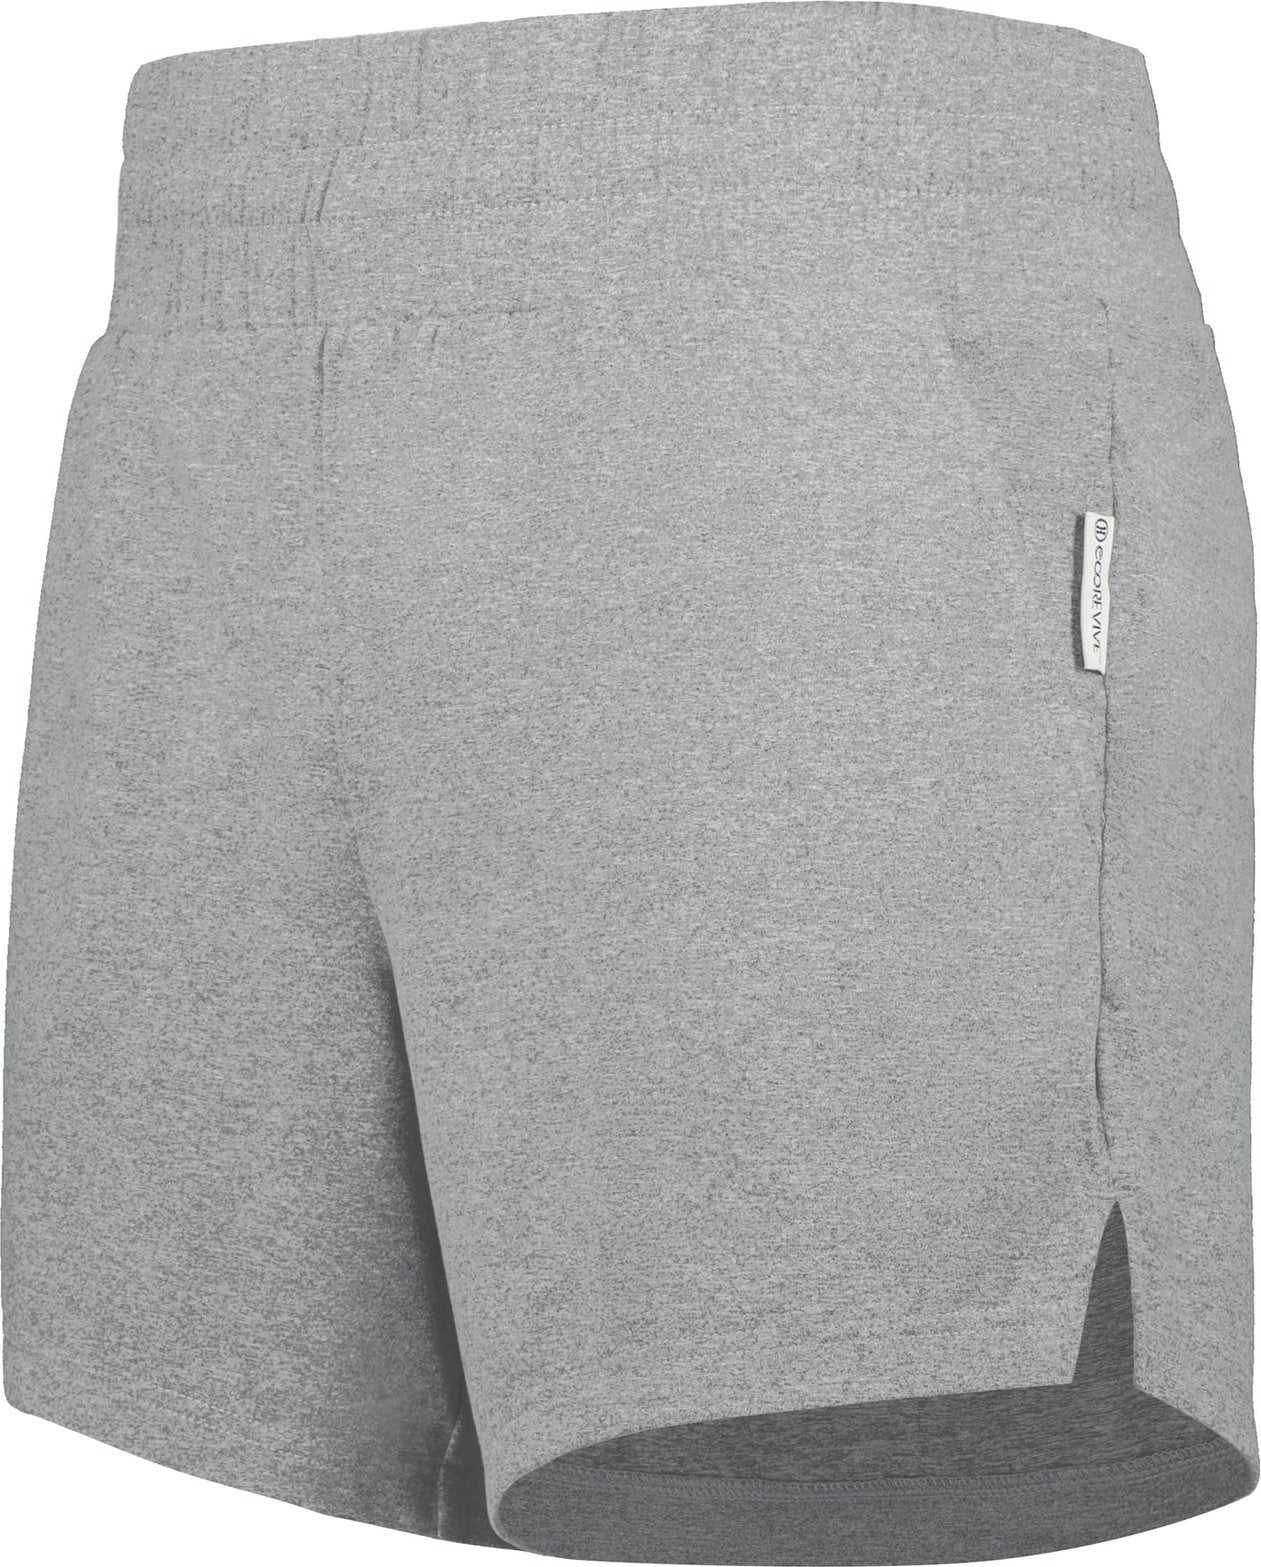 Holloway 223704 Ladies Ventura Soft Knit Shorts - Grey Heather - HIT a Double